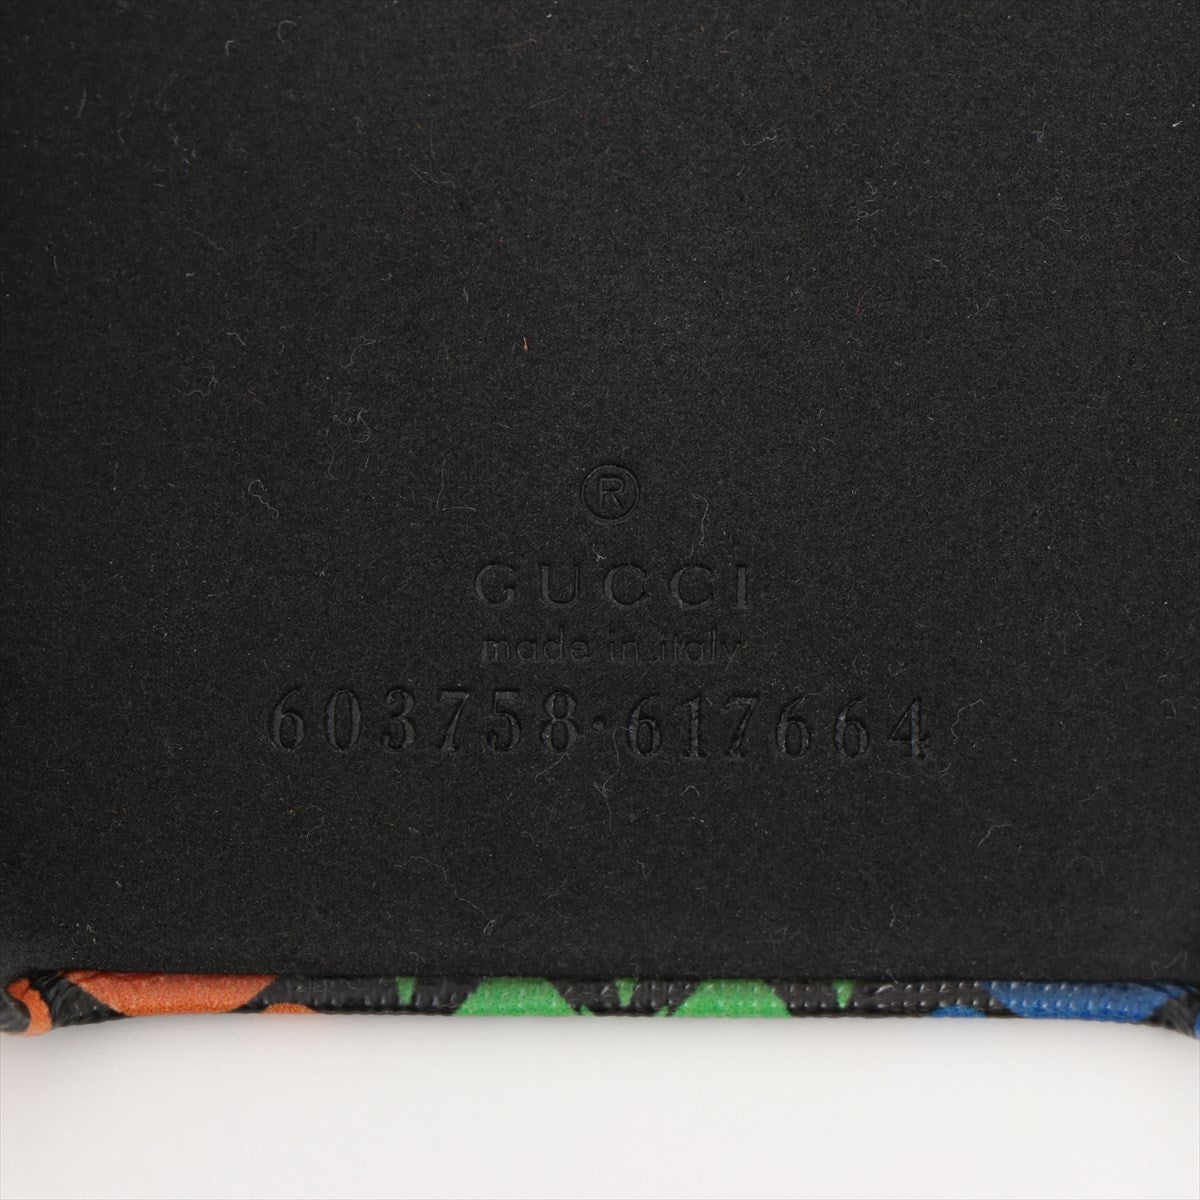 Gucci GG cychedelic 603758 PVC Mobile phone case Multicolor